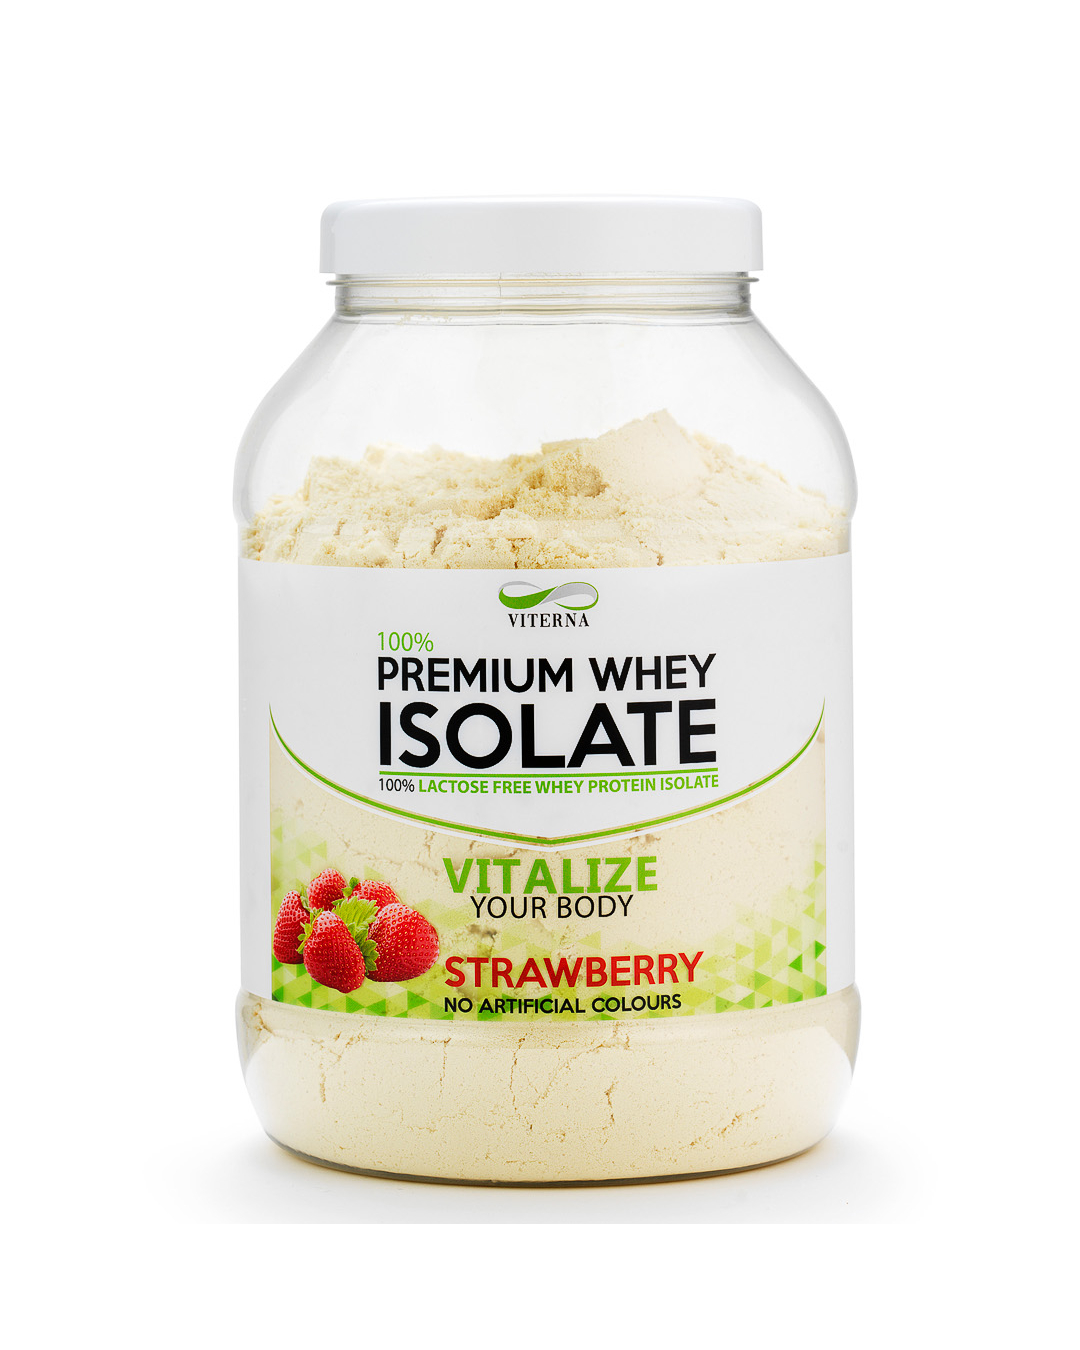 Viterna 100% Premium Whey Isolate, 900g - Strawberry